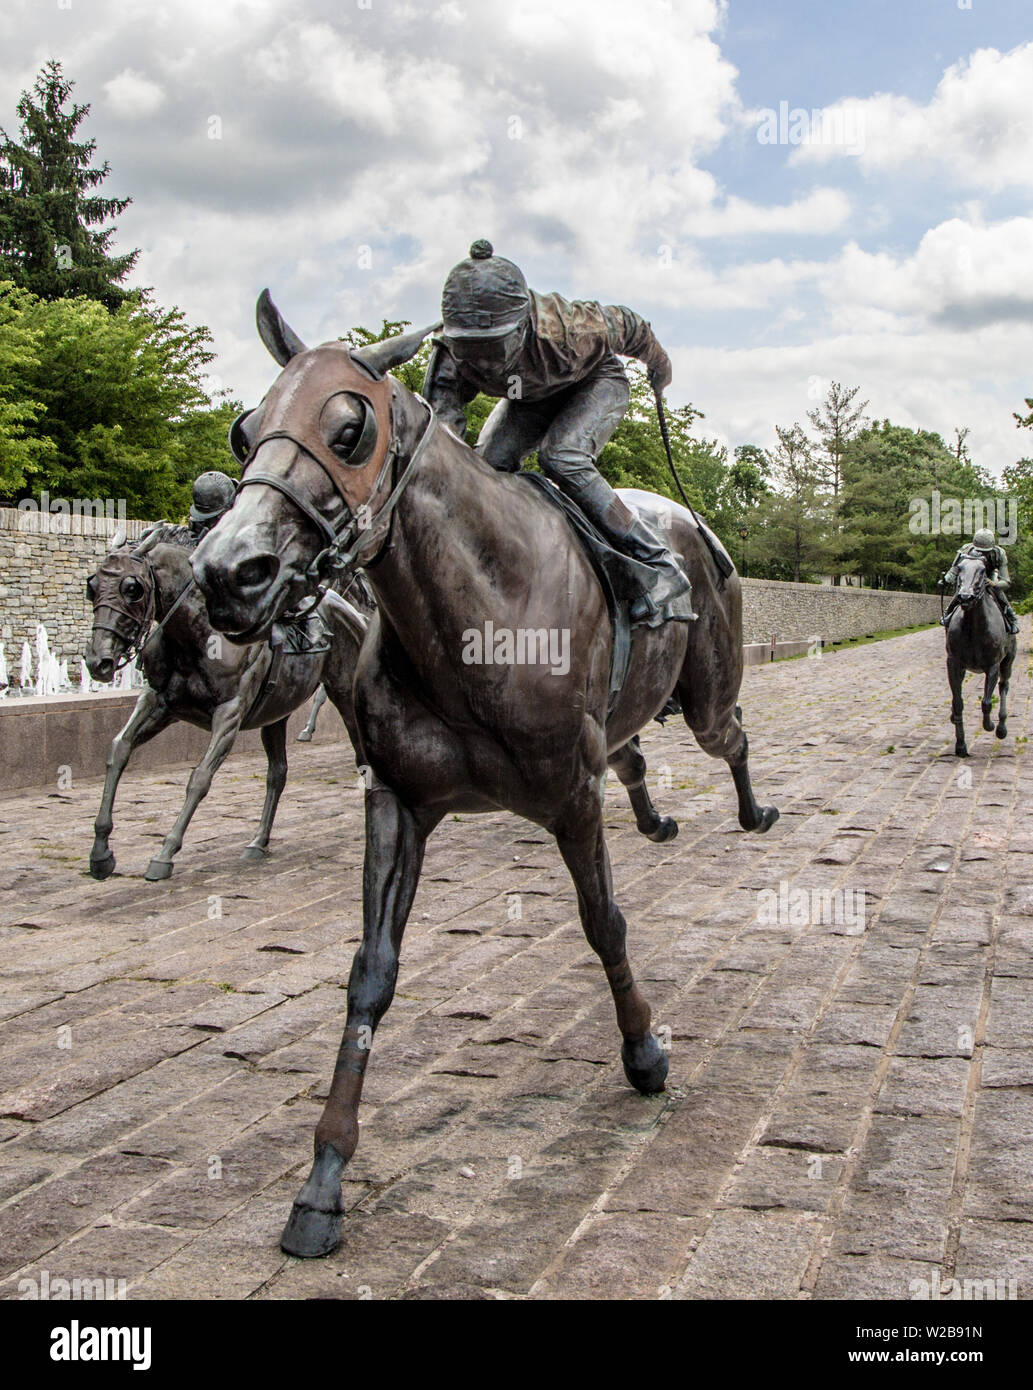 Bellissimo Parco purosangue nel centro di Lexington, Kentucky caratteristiche sculture di cavalli purosangue da artista Gweyn Reardon. Foto Stock